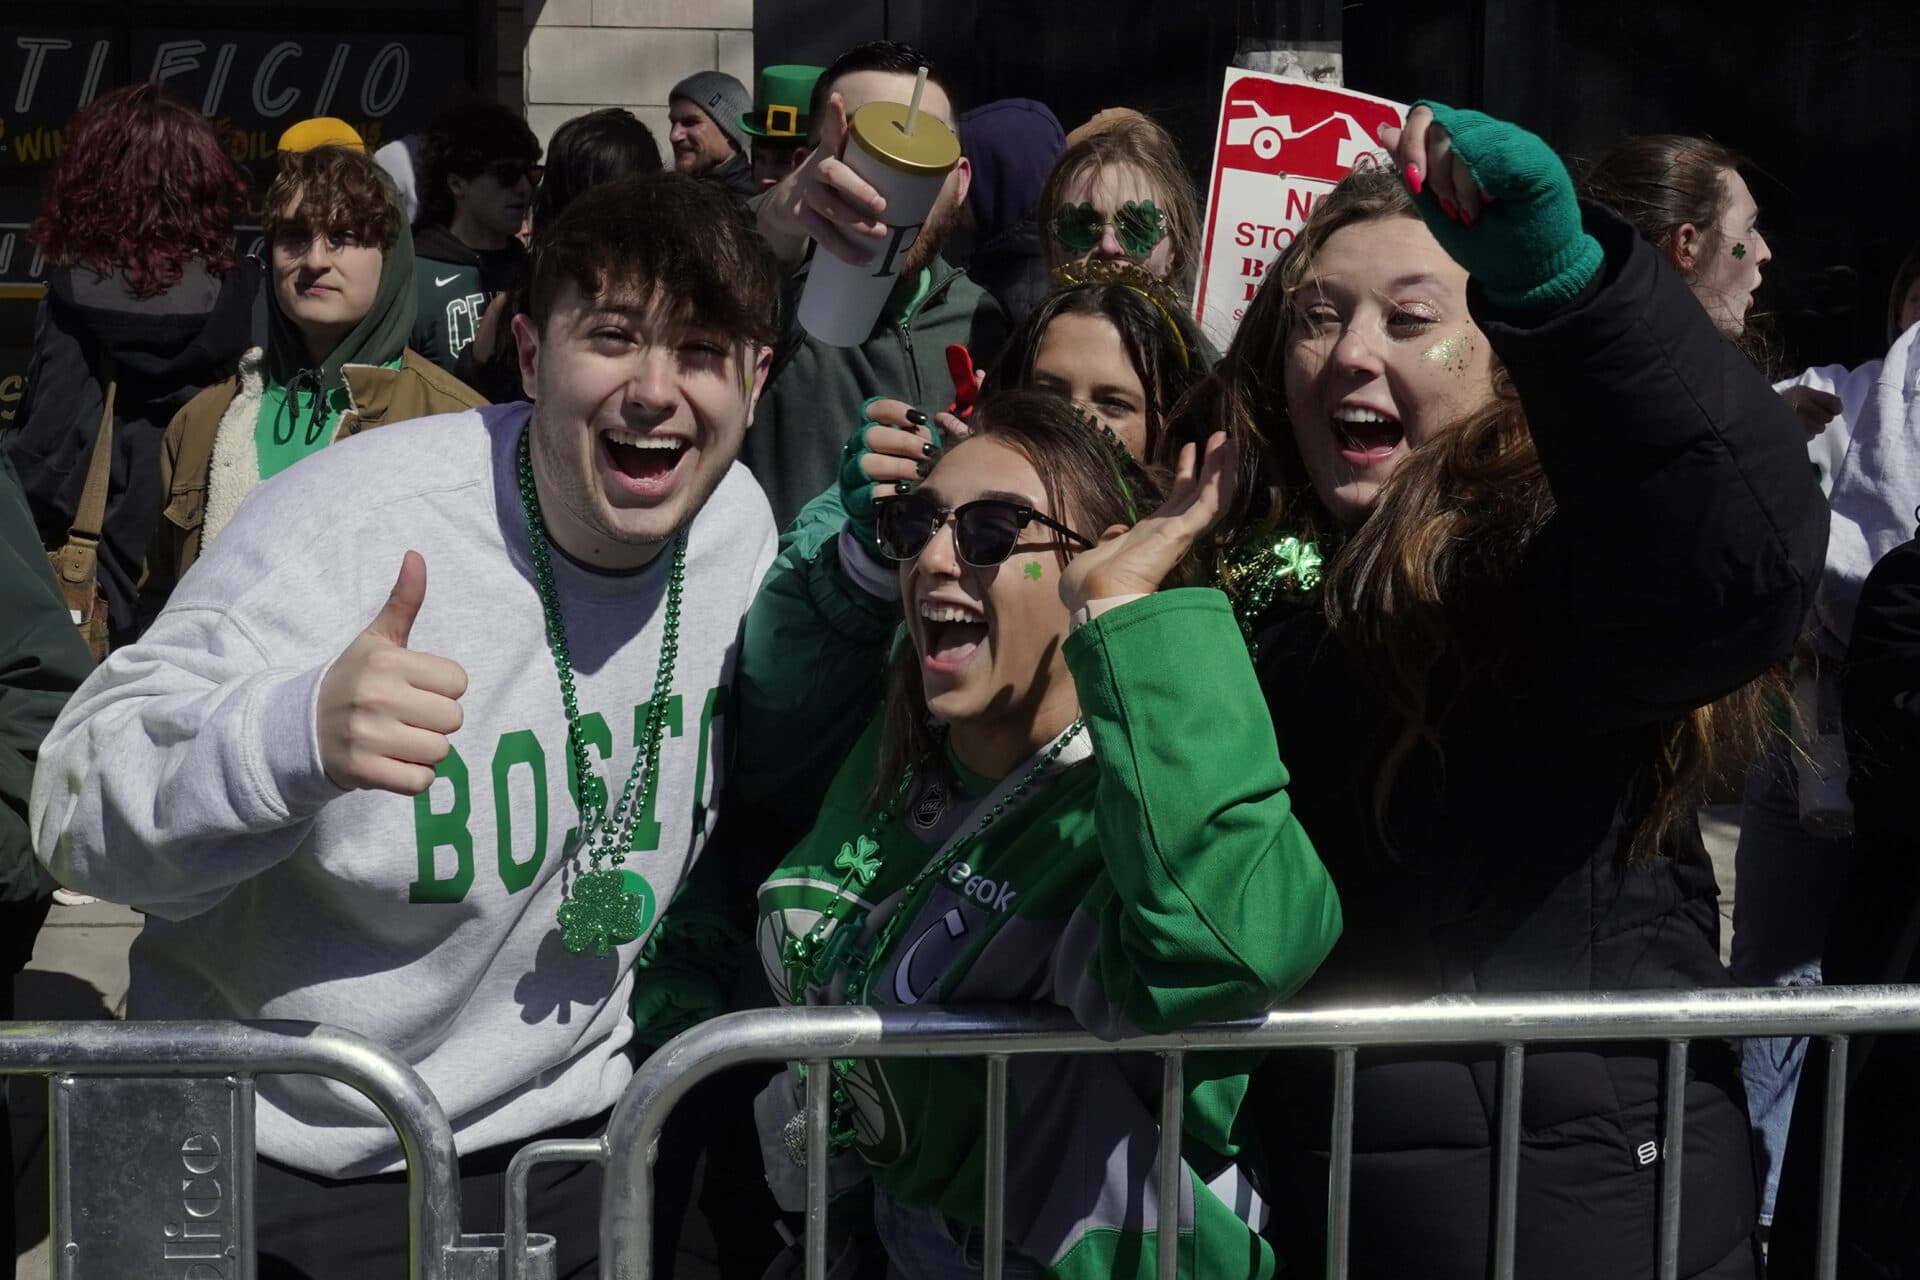 Spectators watch the annual St. Patrick's Day parade. (Steven Senne/AP)